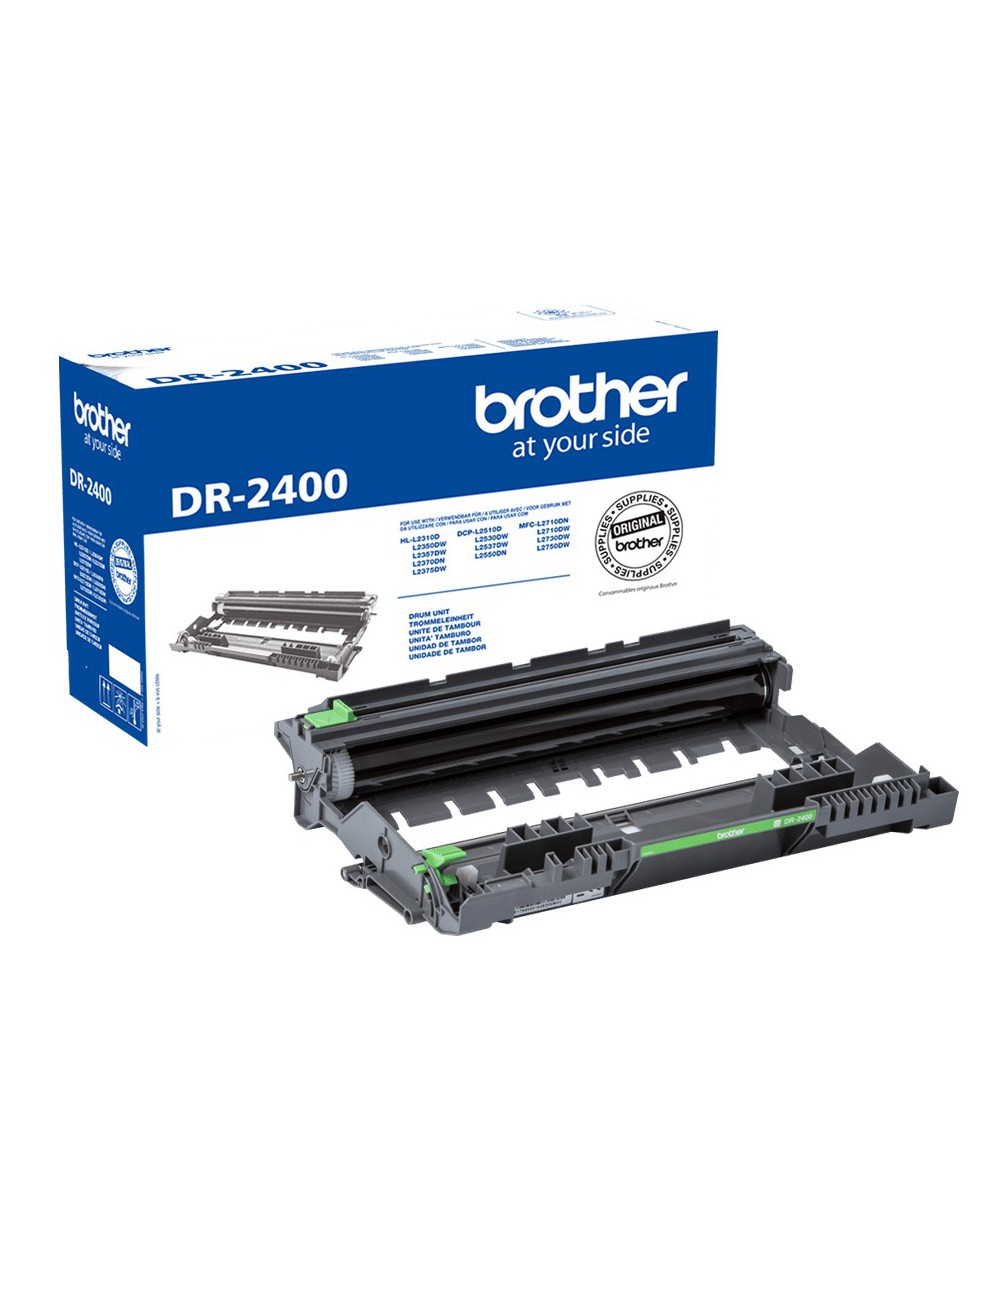 Brother DR-2400 tamburo per stampante Originale 1 pz